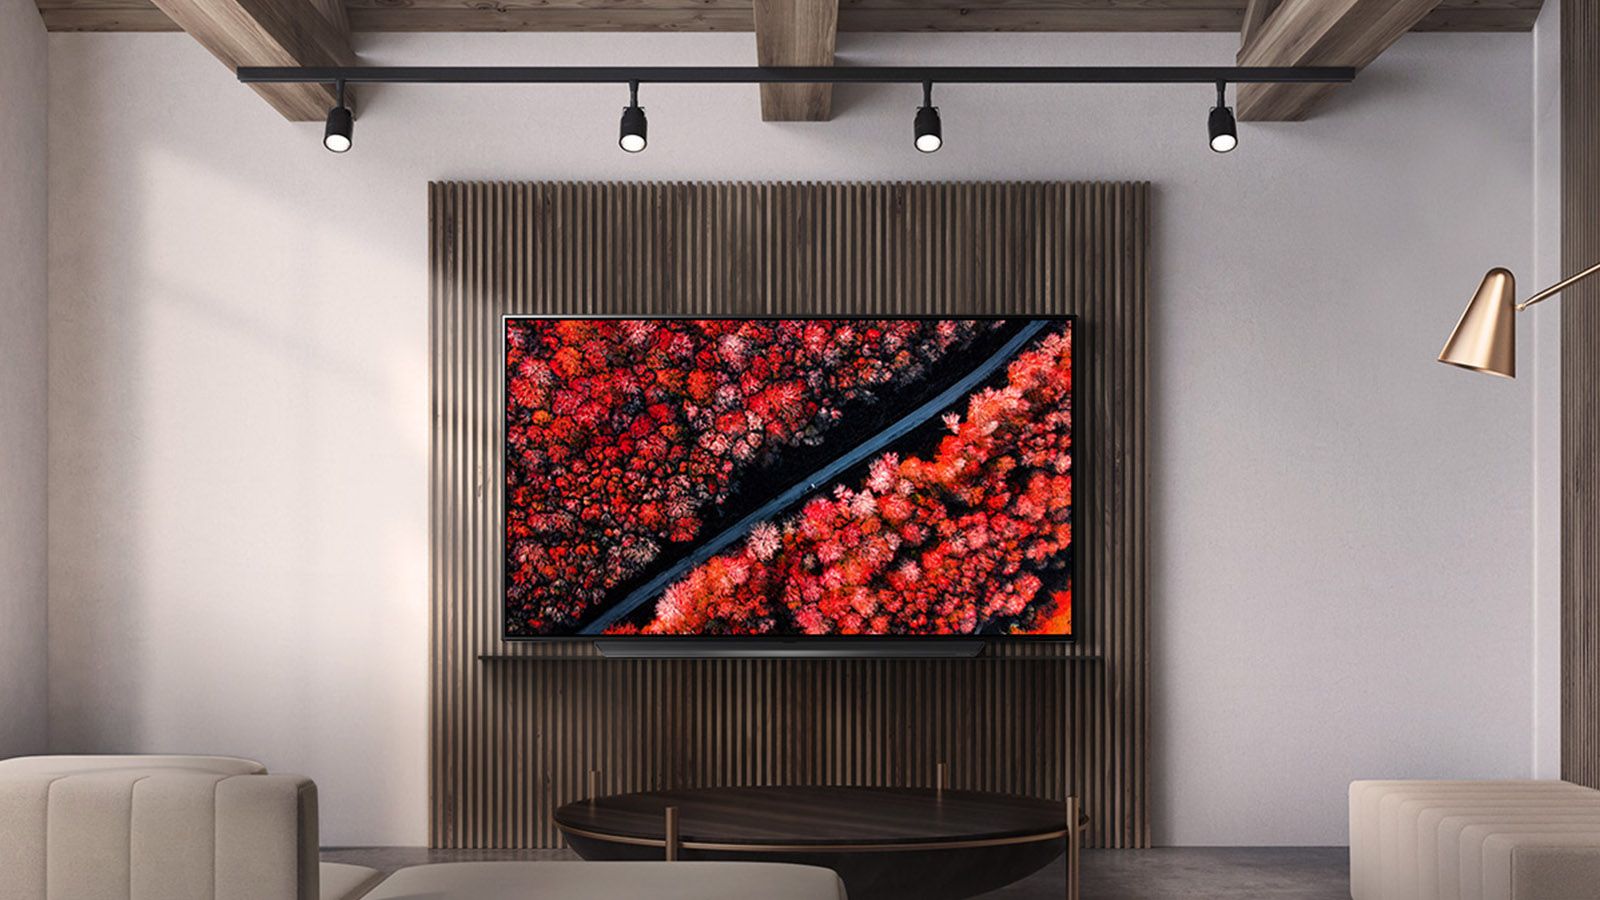 LG’s 2020 OLED TVs to have edge displays image 1